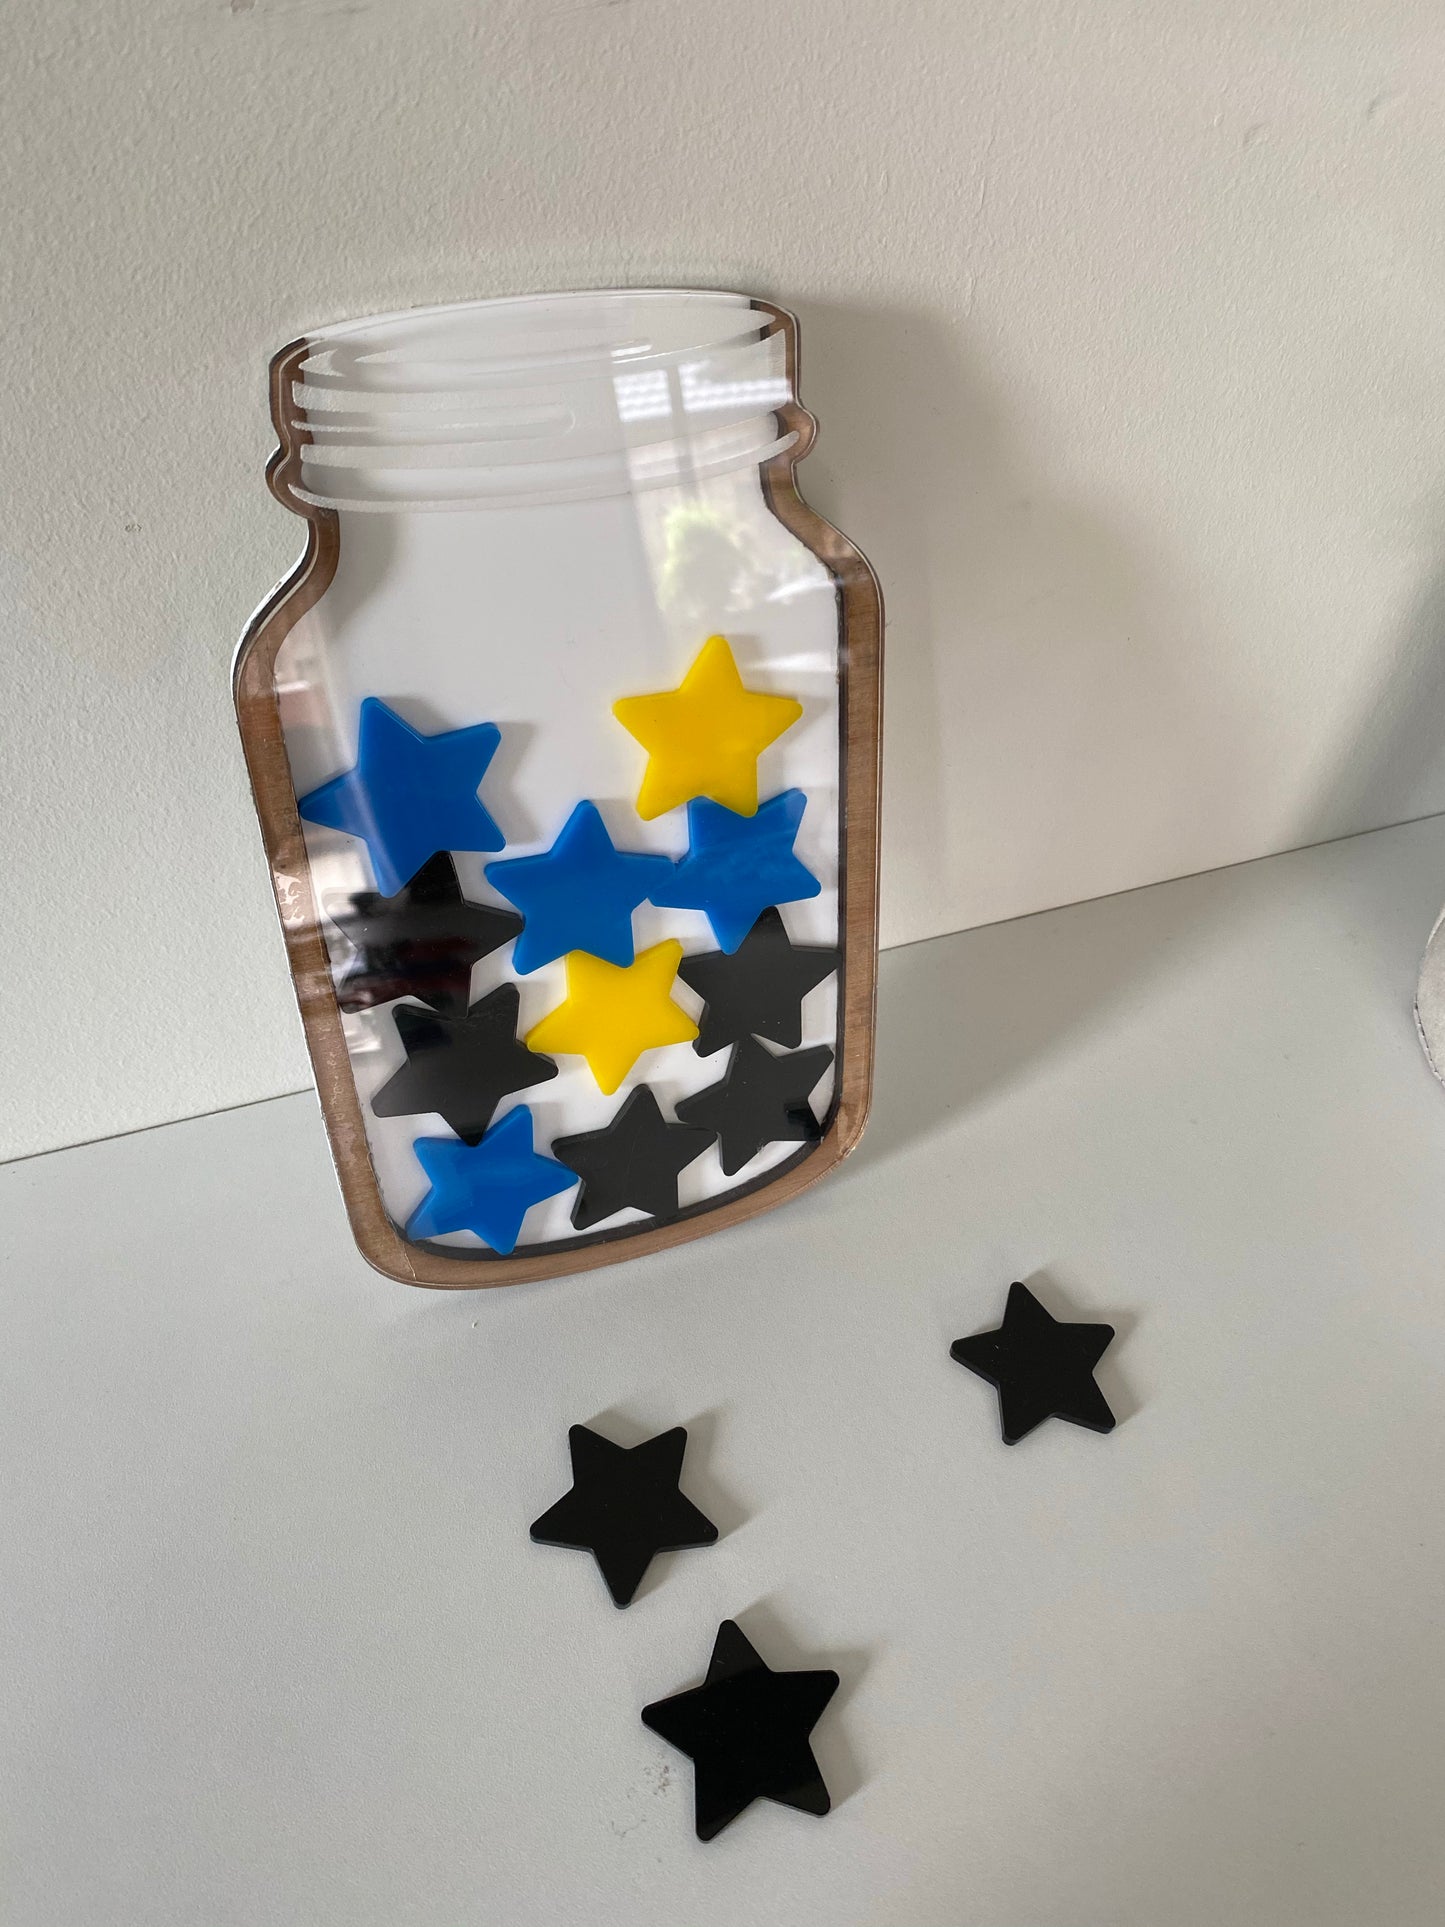 Reward jars in acrylic